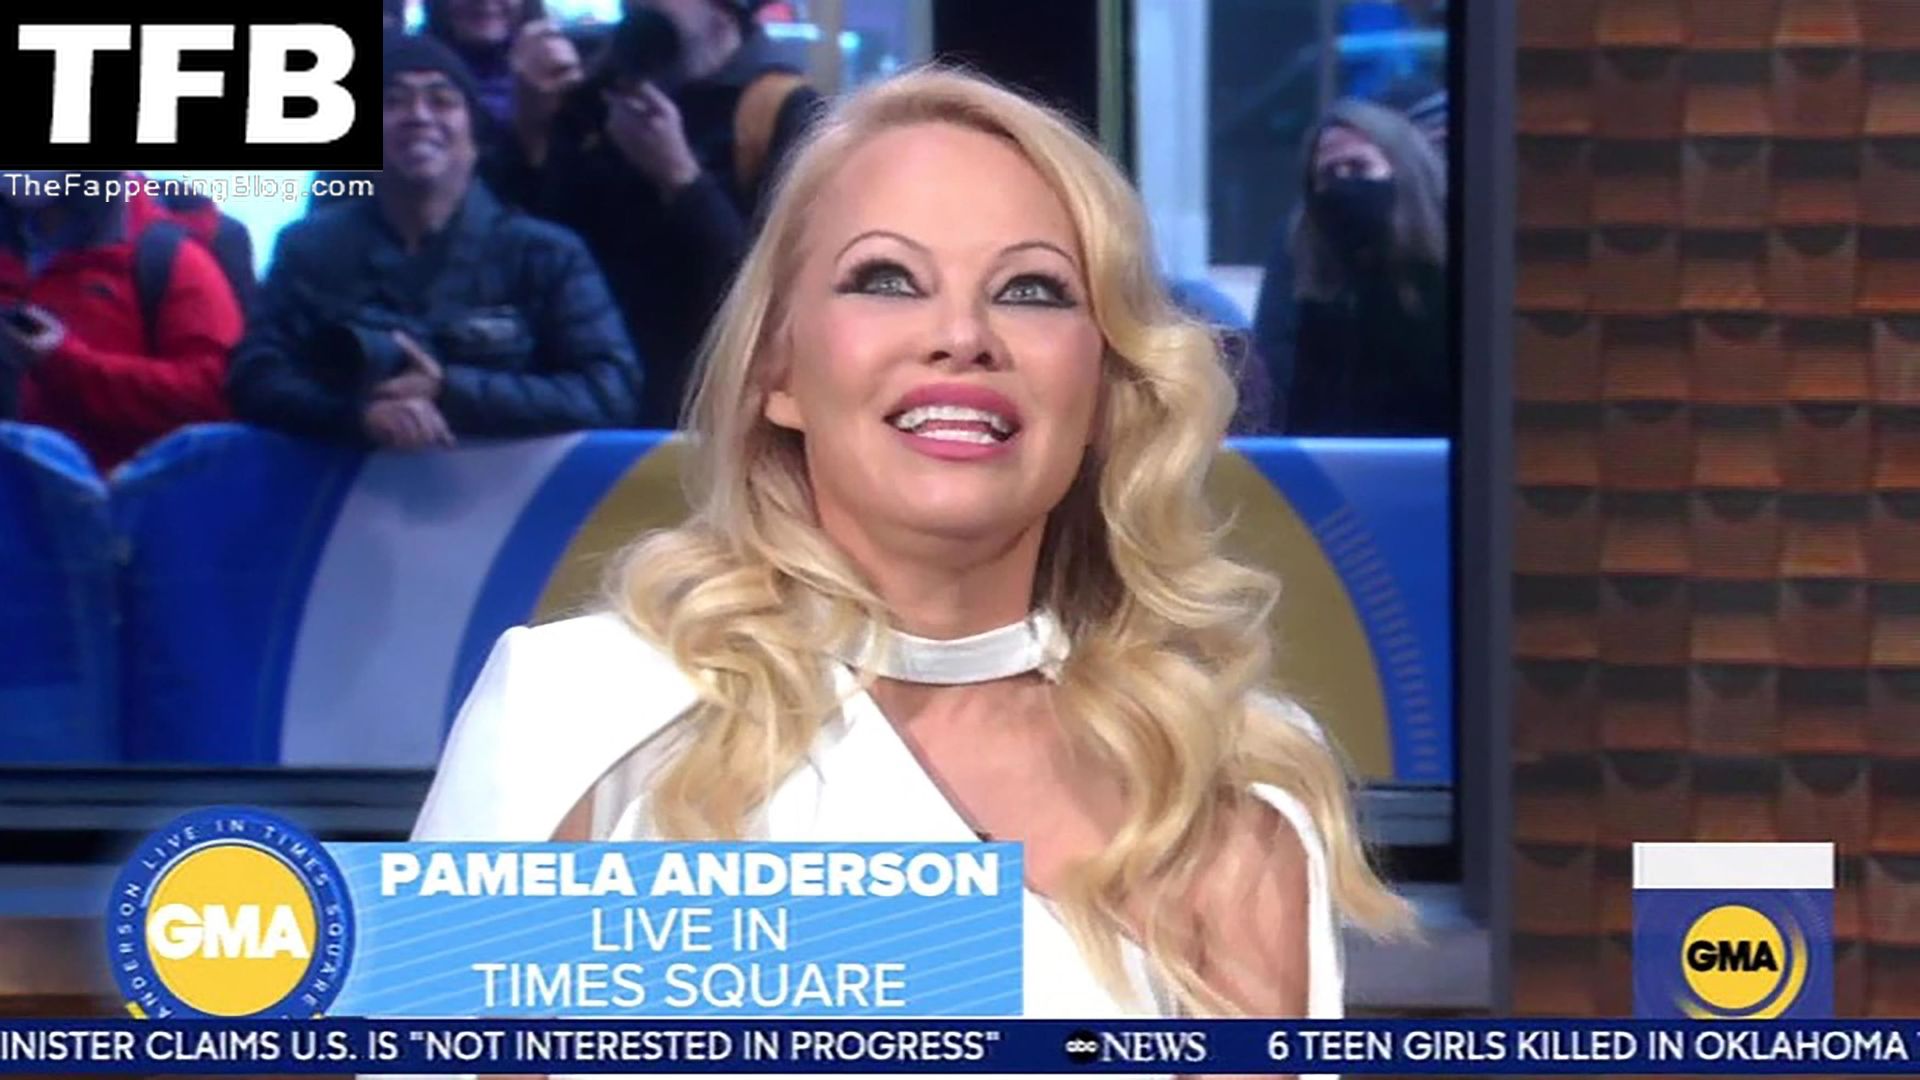 Pamela-Anderson-Hot-The-Fappening-Blog-5.jpg